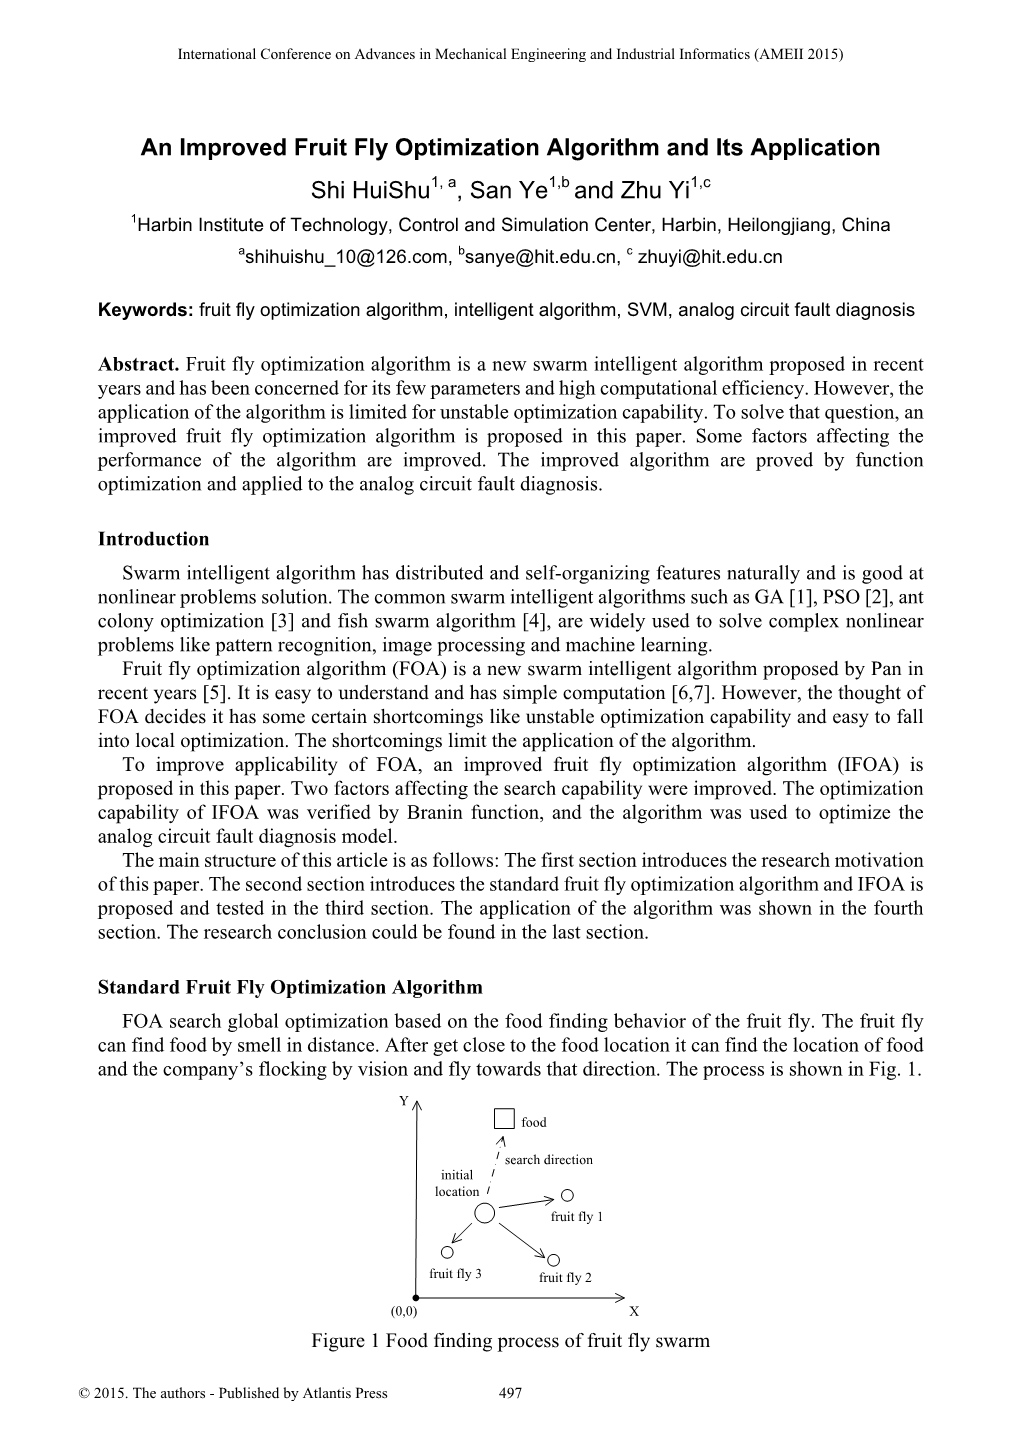 An Improved Fruit Fly Optimization Algorithm and Its Application Shi Huishu1, A, San Ye1,B and Zhu Yi1,C